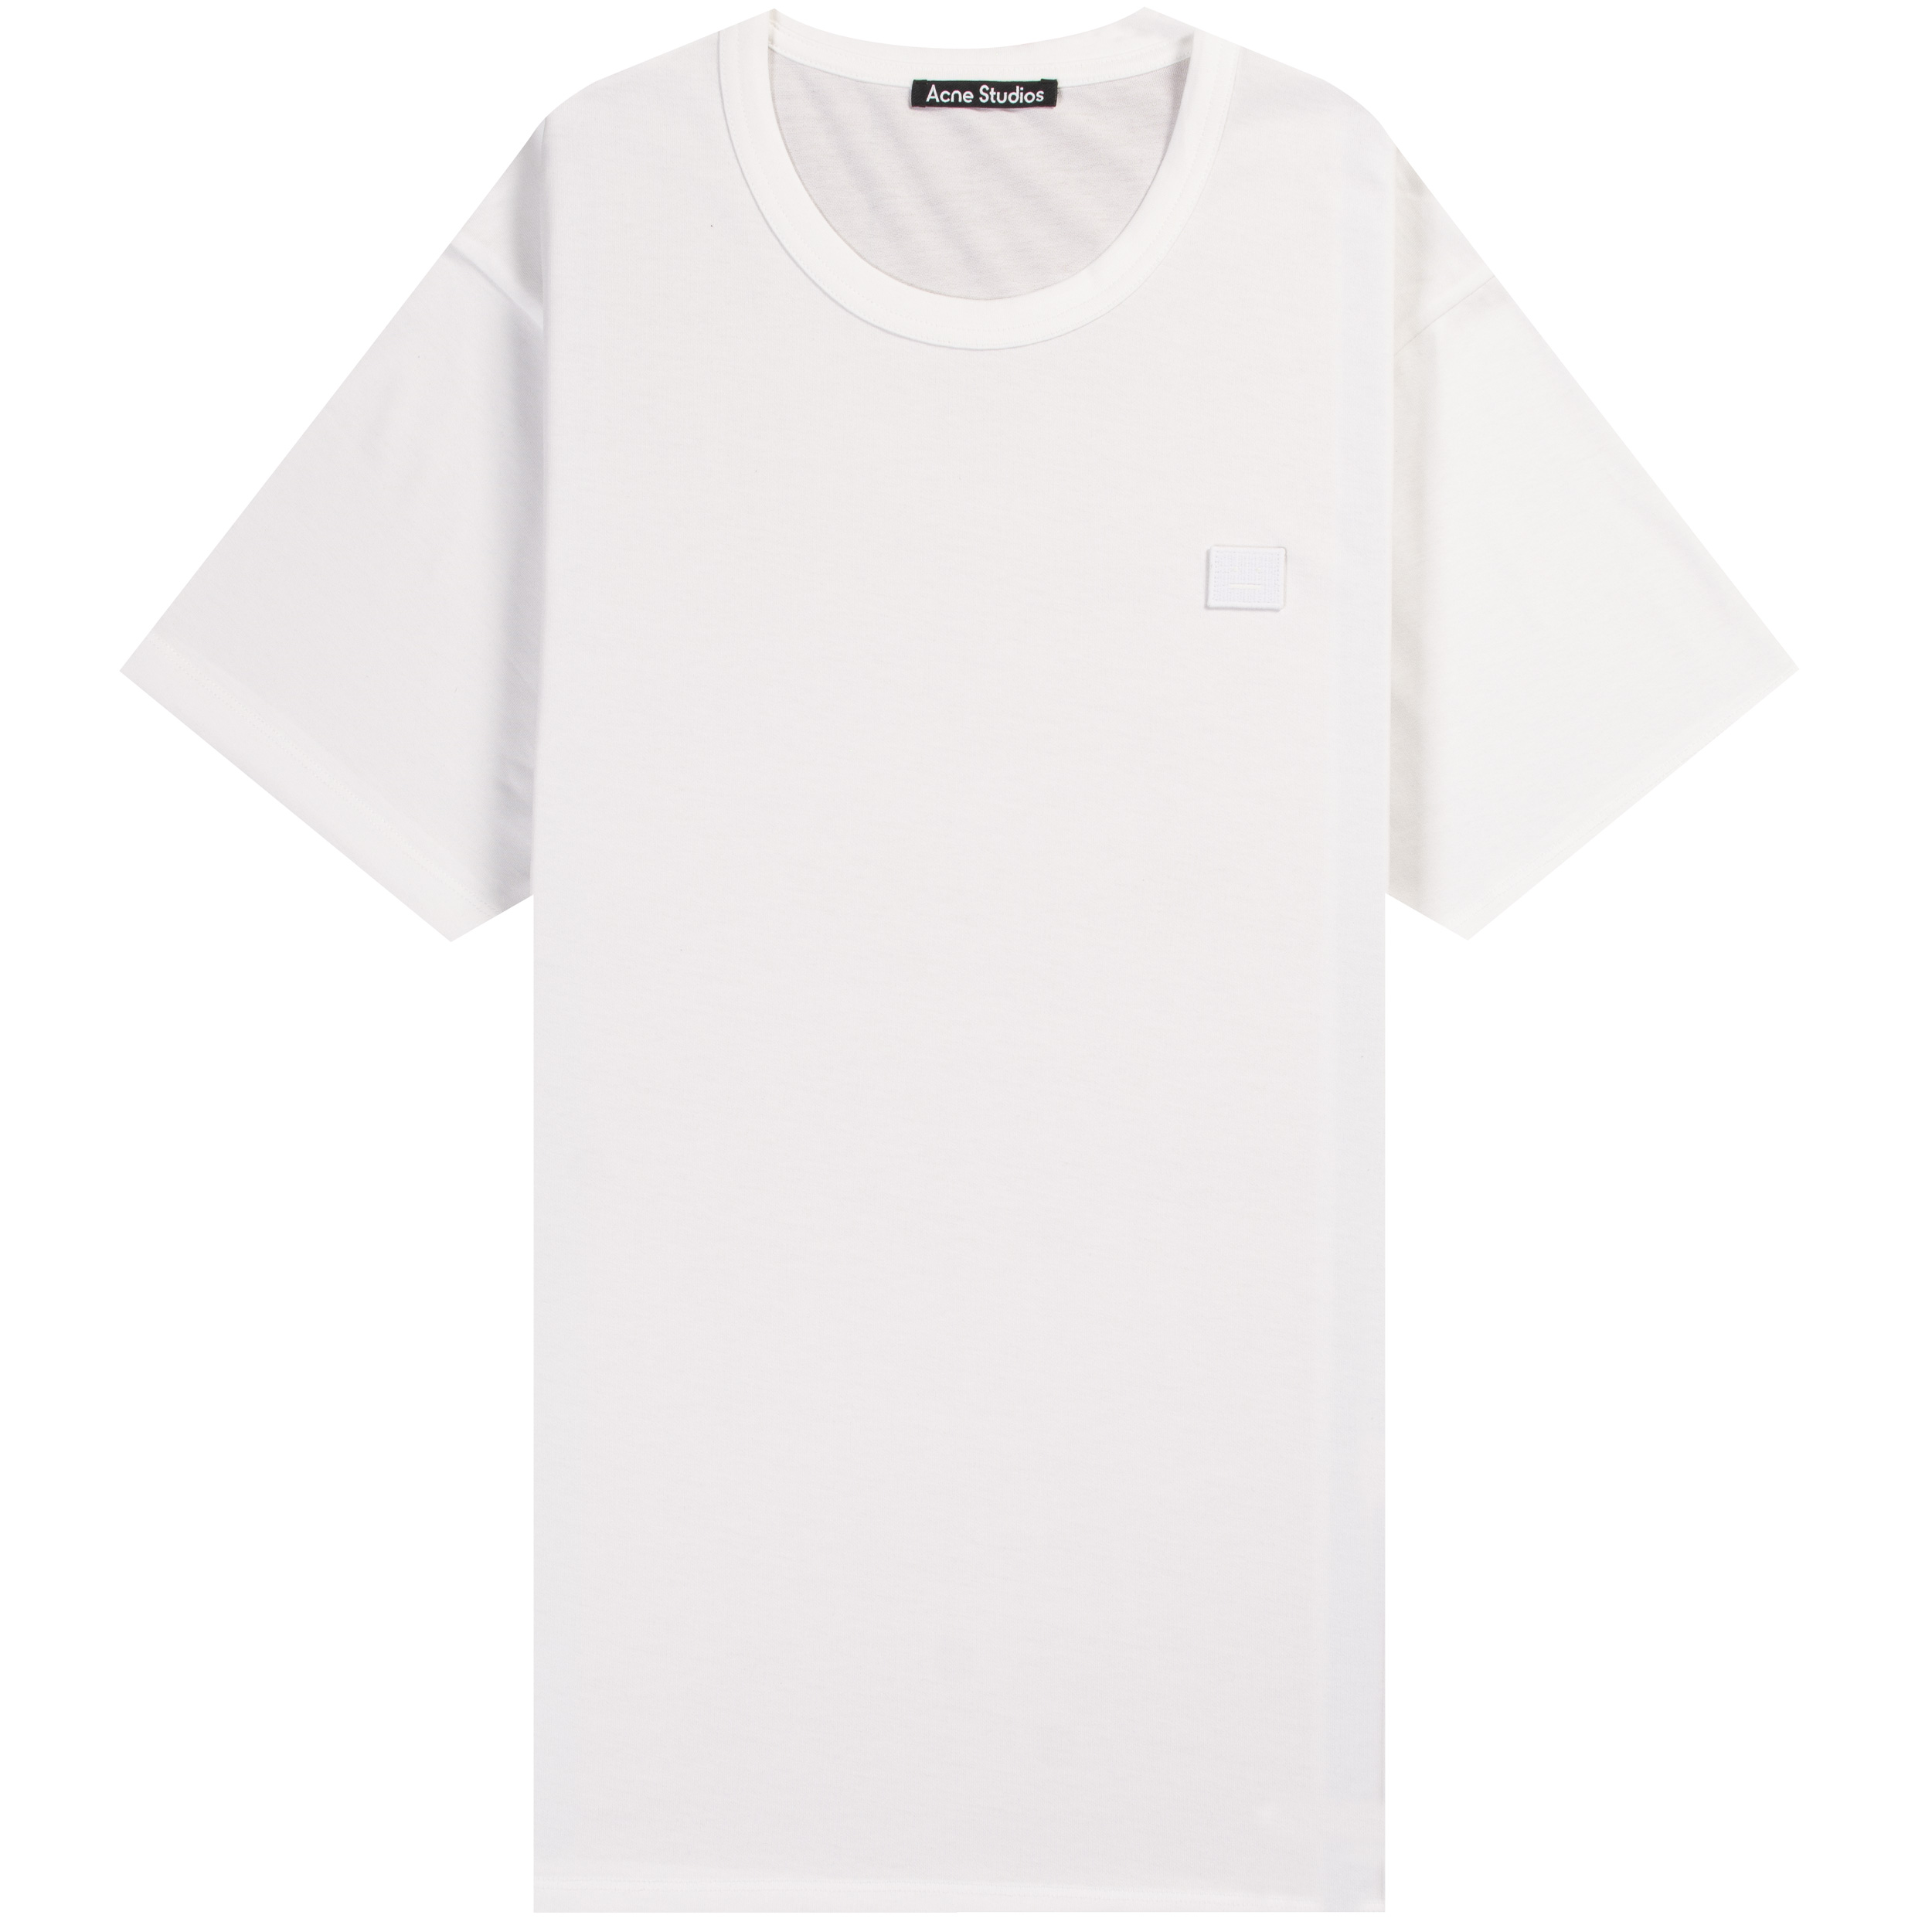 Acne Studios ’Nash Face’ T-Shirt White